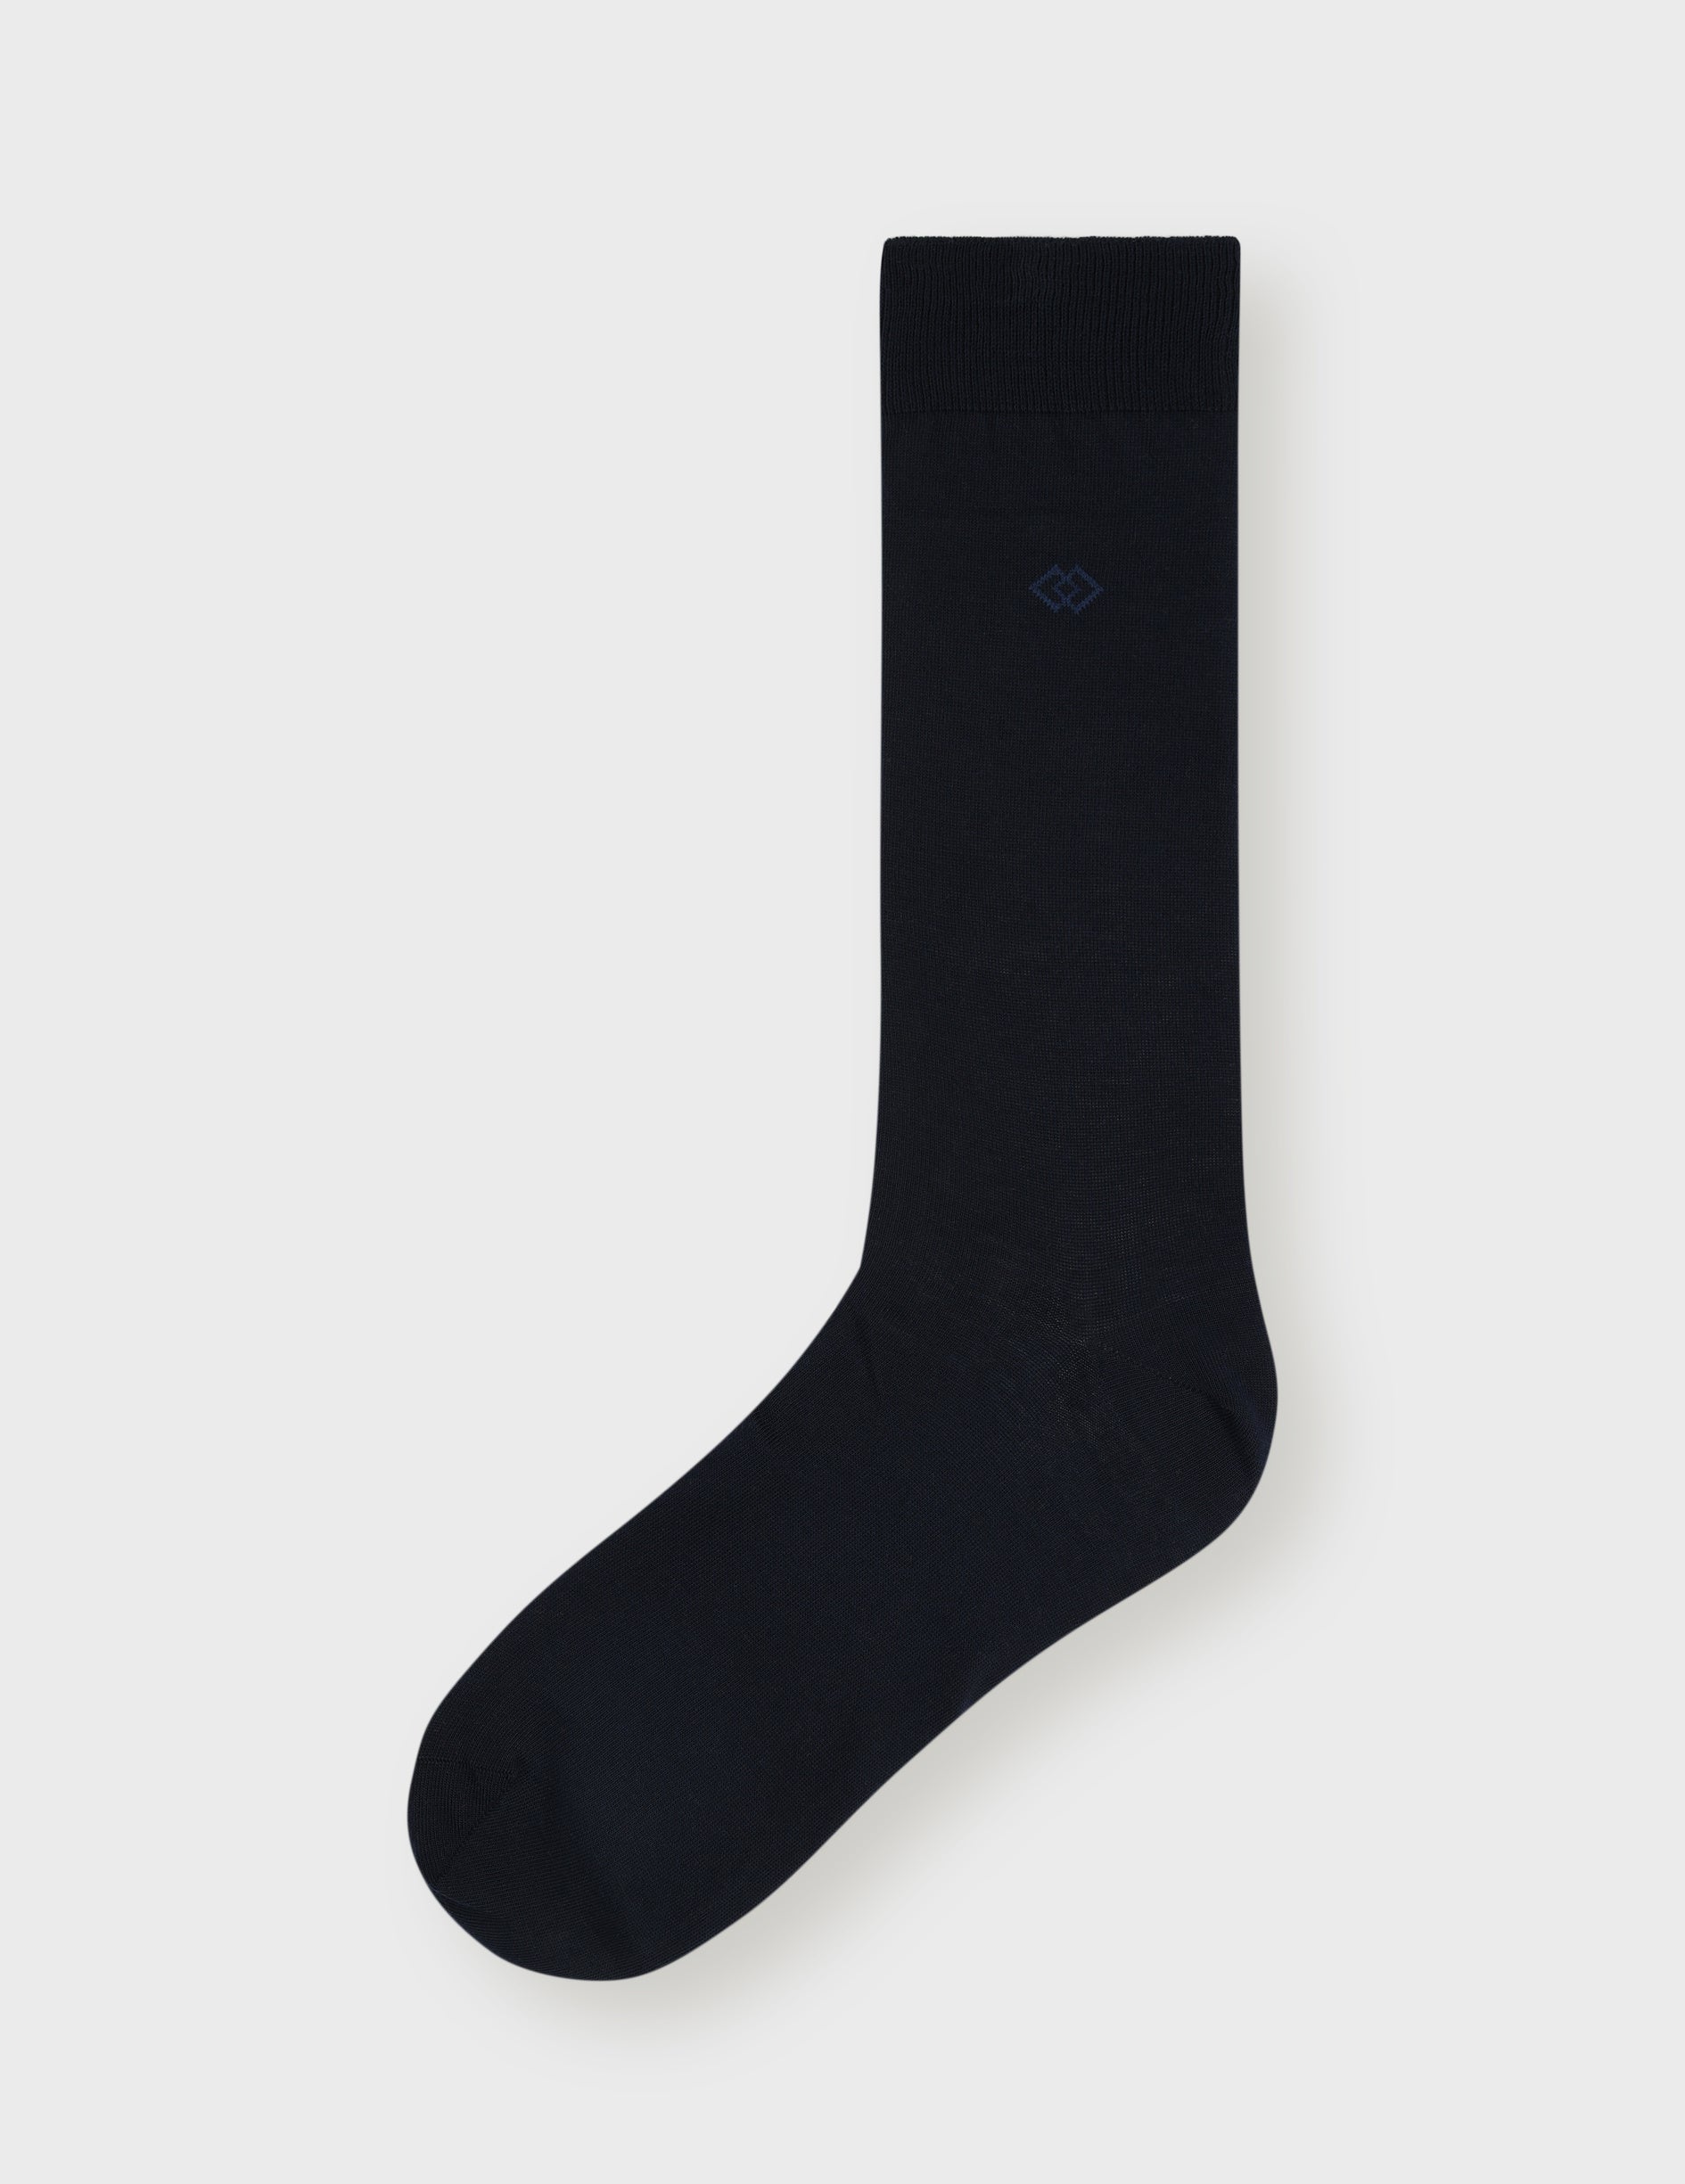 Navy double lisle socks